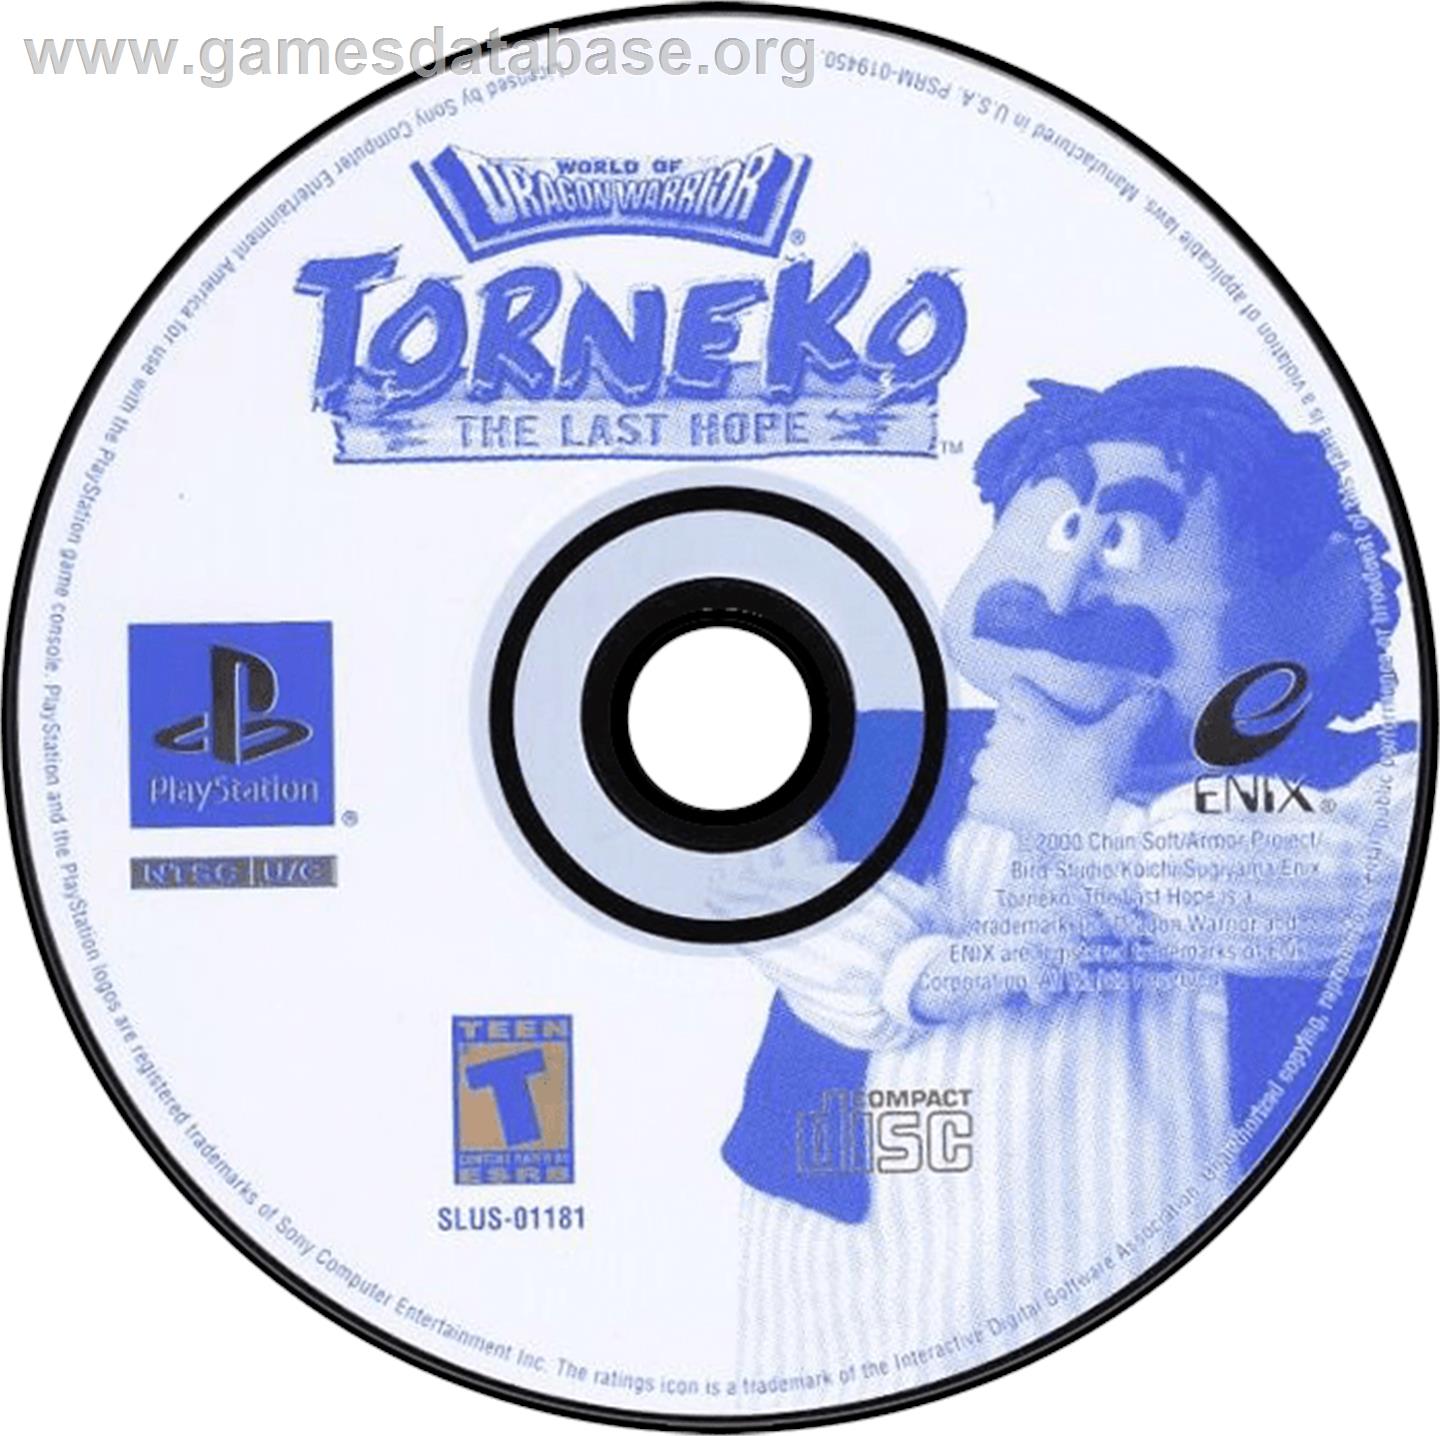 World of Dragon Warrior: Torneko: The Last Hope - Sony Playstation - Artwork - Disc